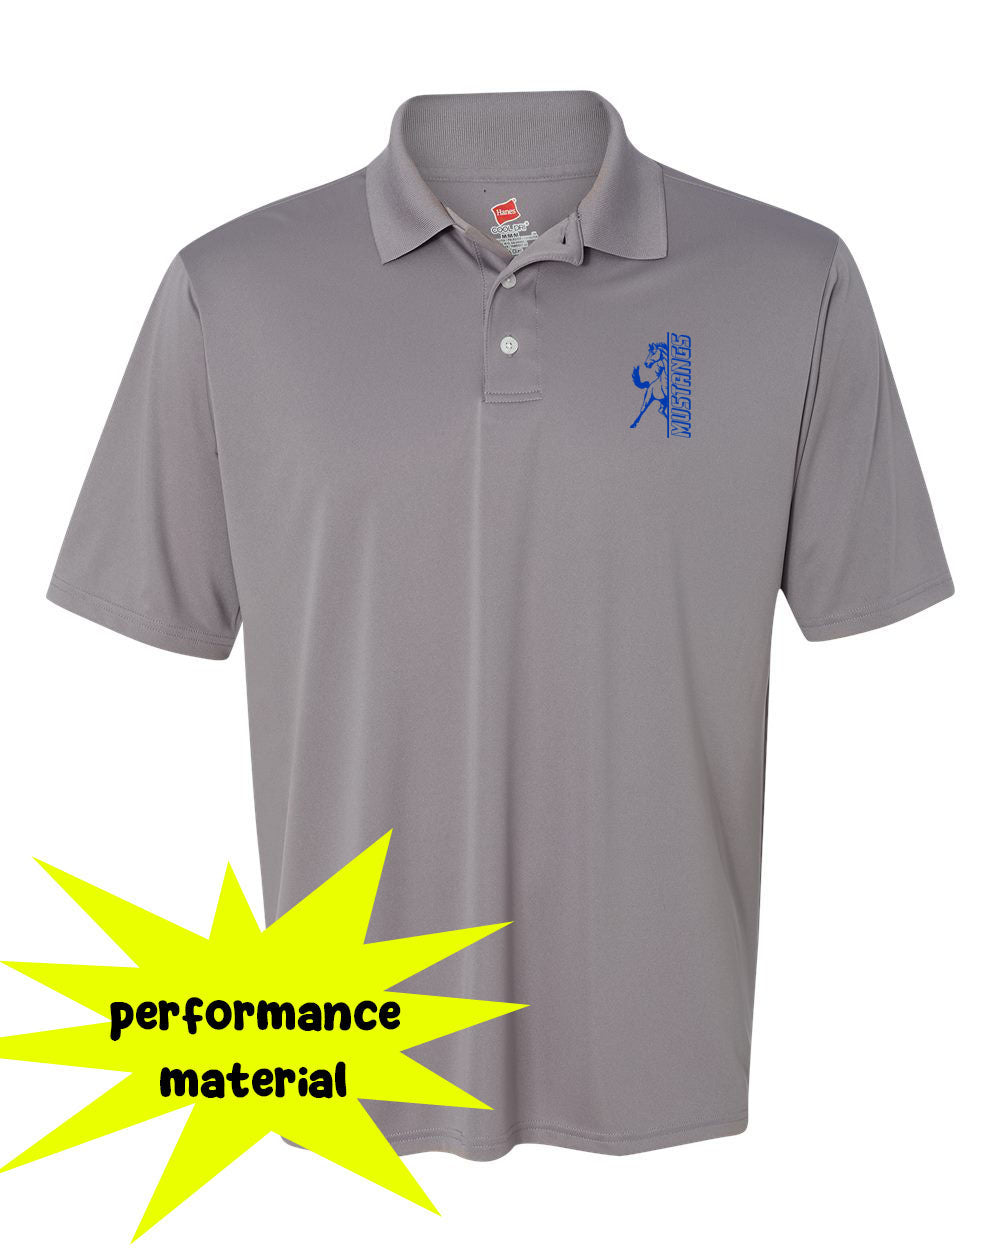 Frelinghuysen Performance Material Polo T-Shirt Design 14